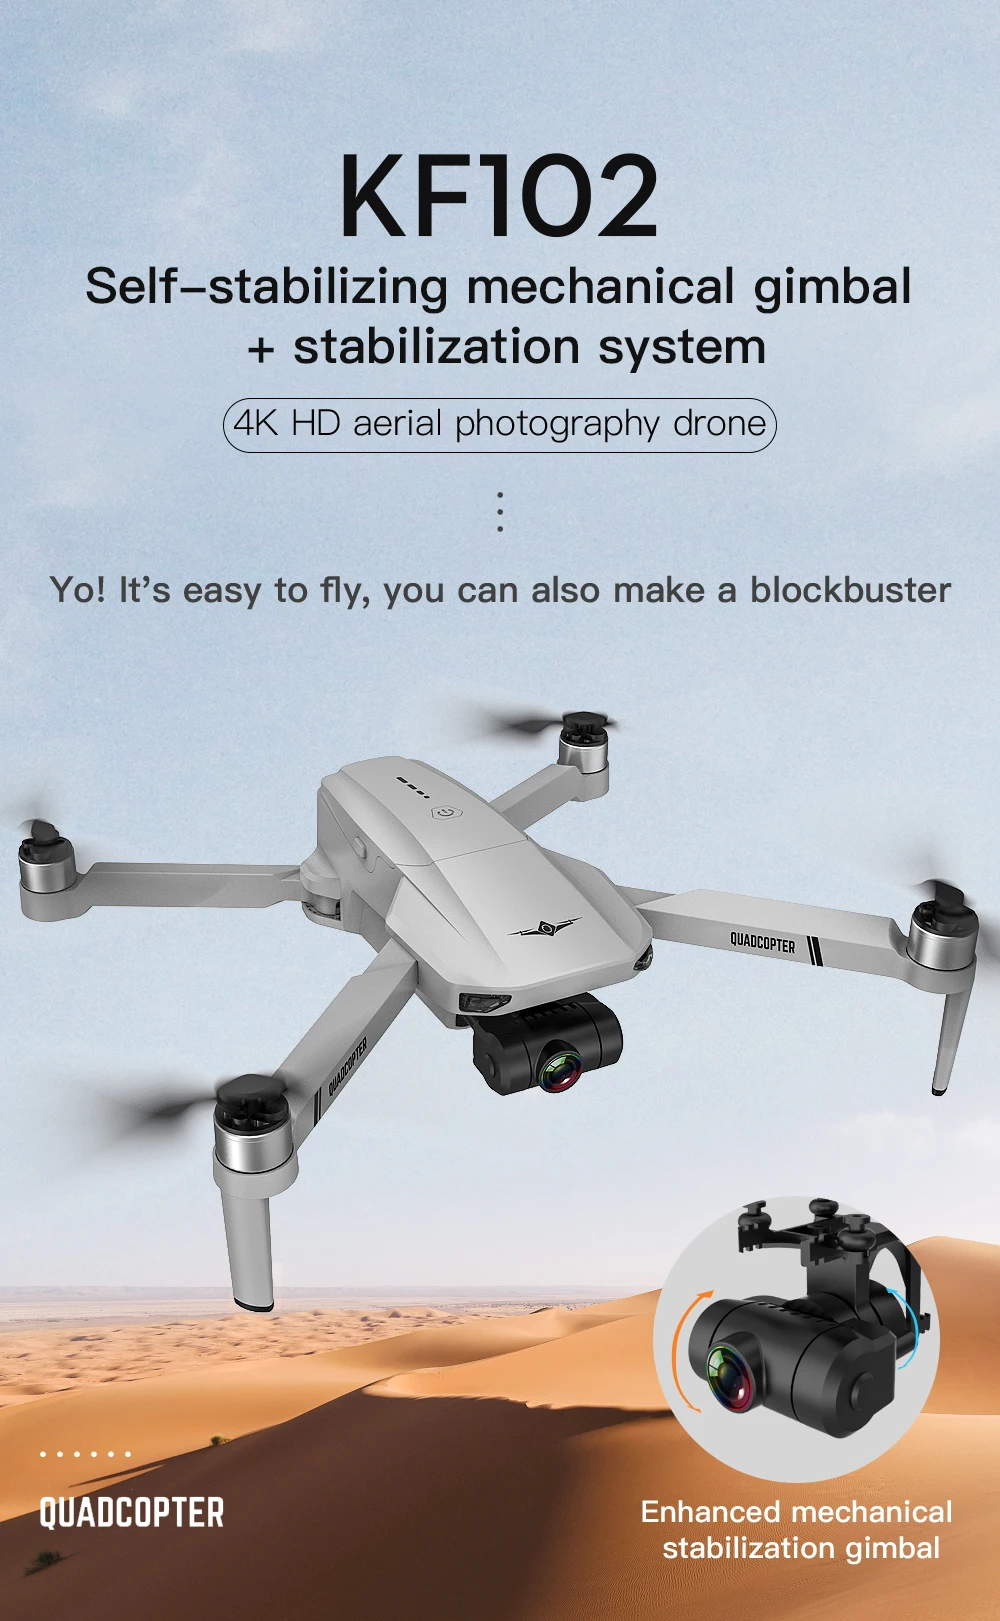 KF102 MAX Drone, KFIO2 Self-stabilizing mechanical gimbal stabilization system 4K HD